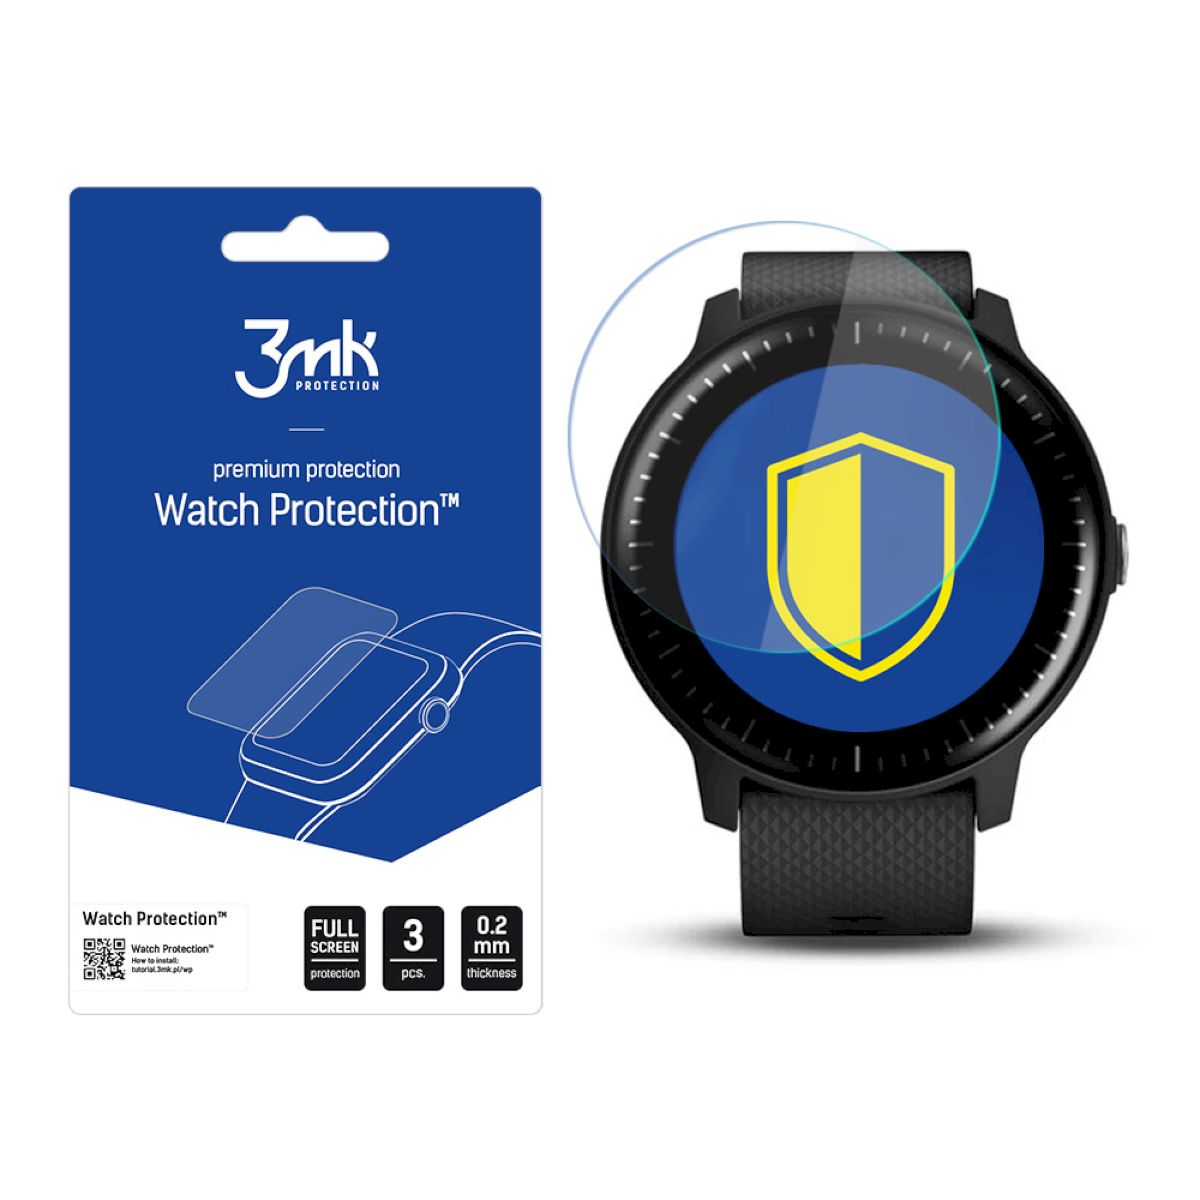 Garmin Vivoactive 3 Music Folia ochronna 3 szt - 3mk Watch Protection ARC+  - 32,90 zł - Otozegarki.pl